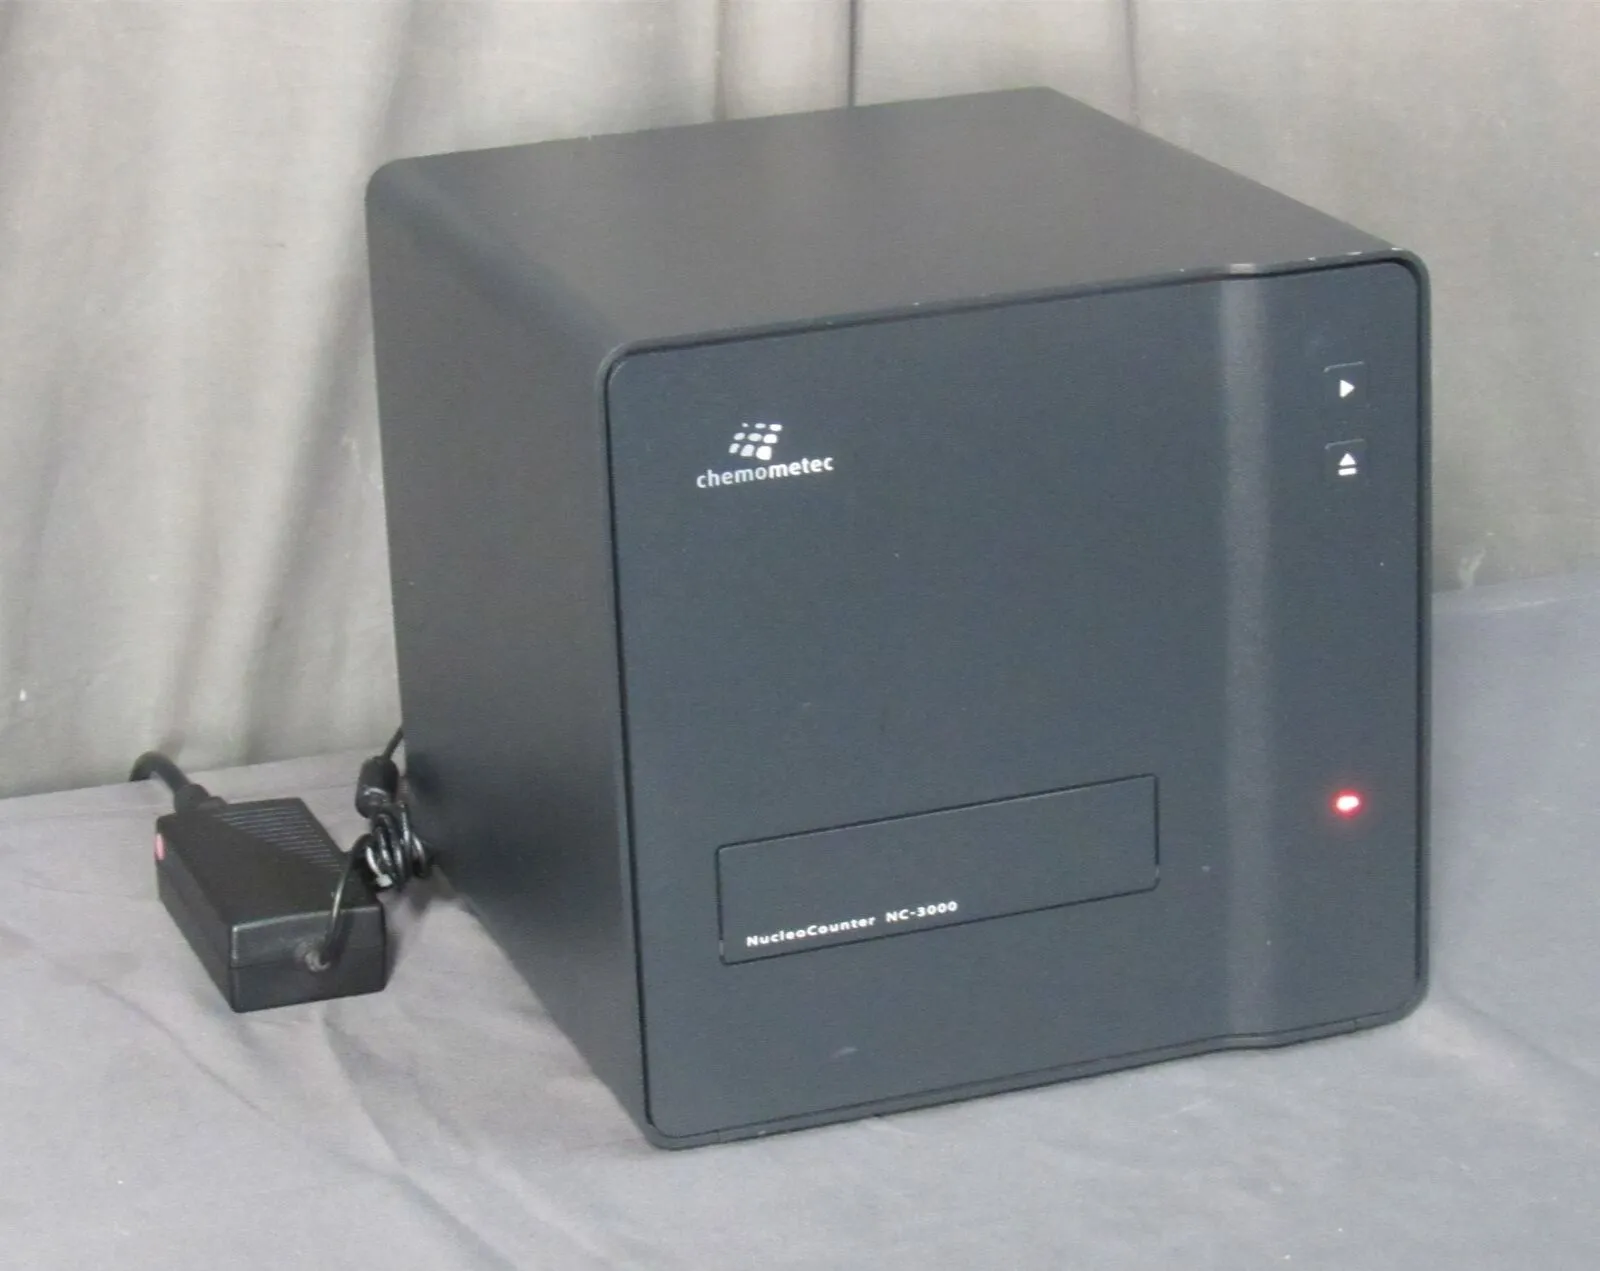 Chemometec NucleoCounter NC-3000 Advanced Image Cytometer